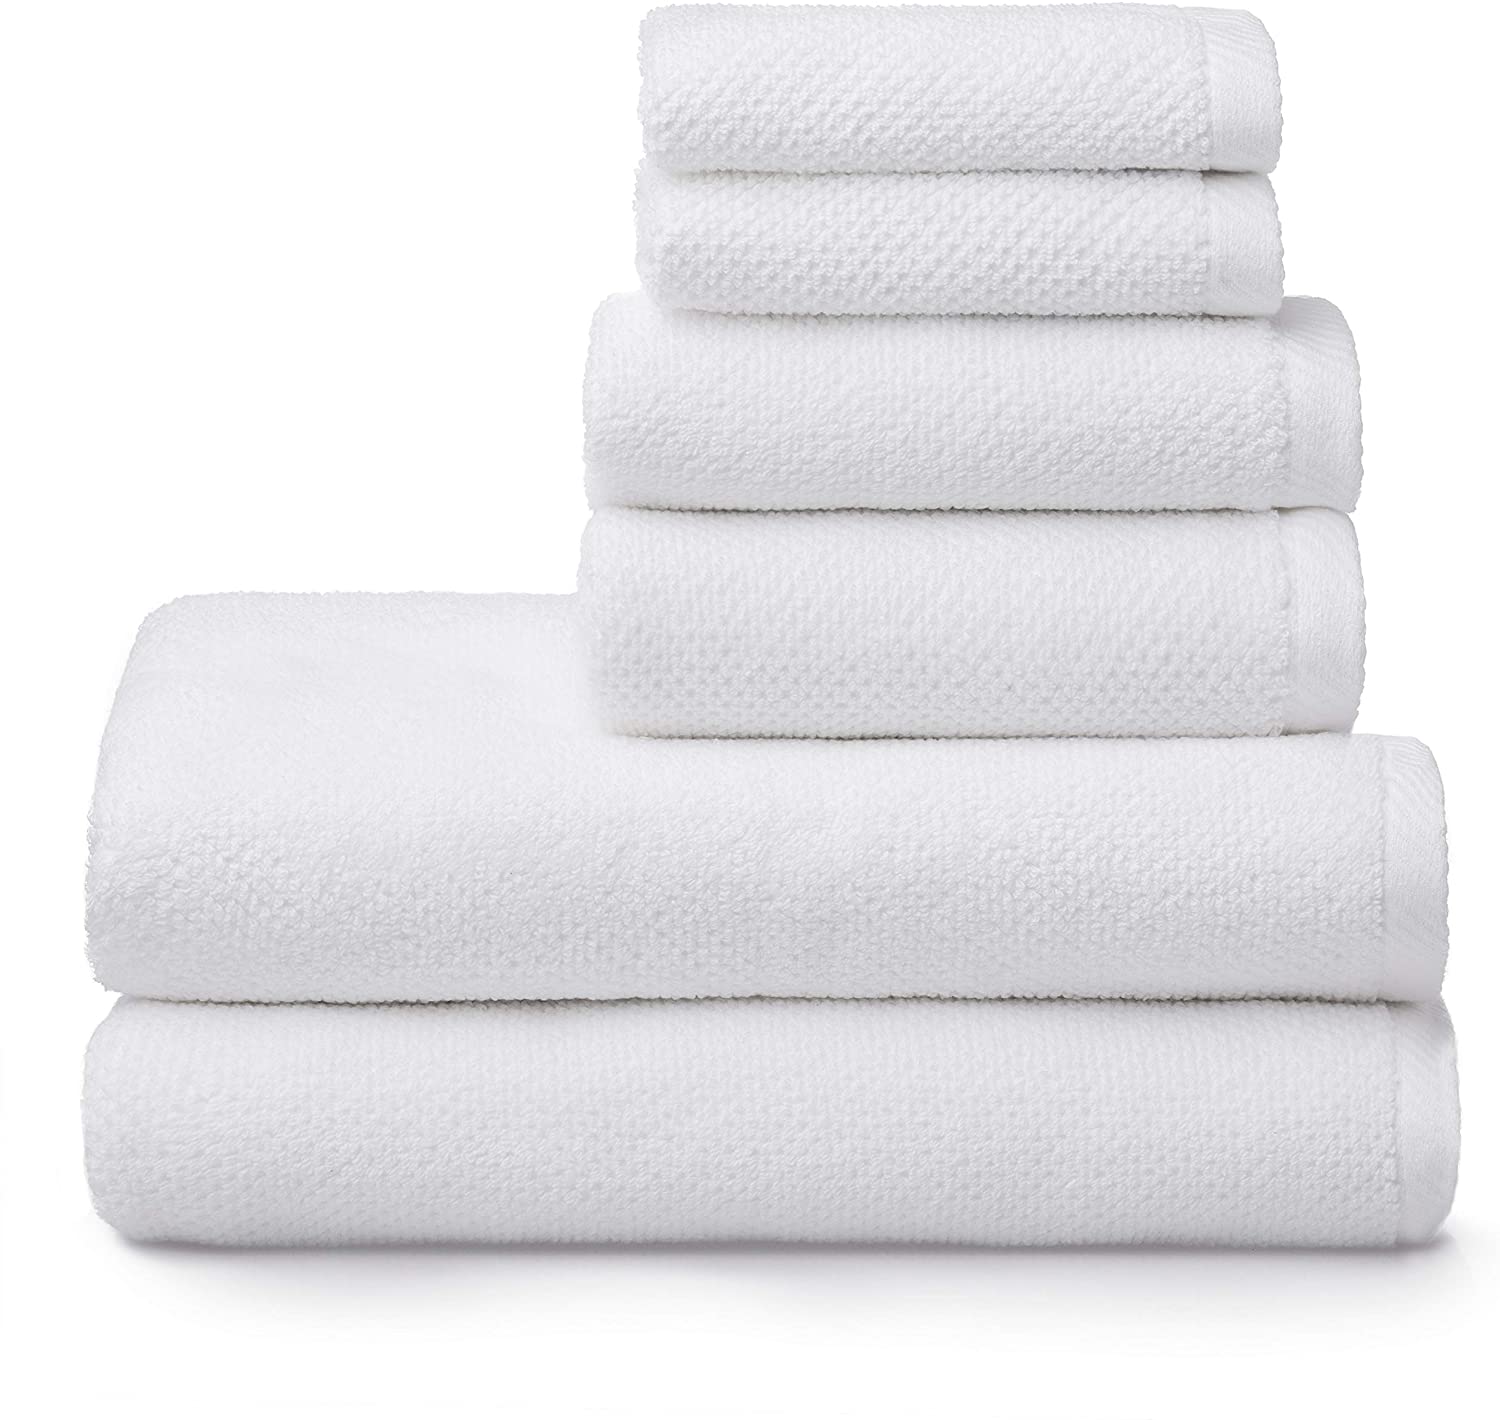 White Bath Towels, Washcloths, Hand Towels & Bath Sheets